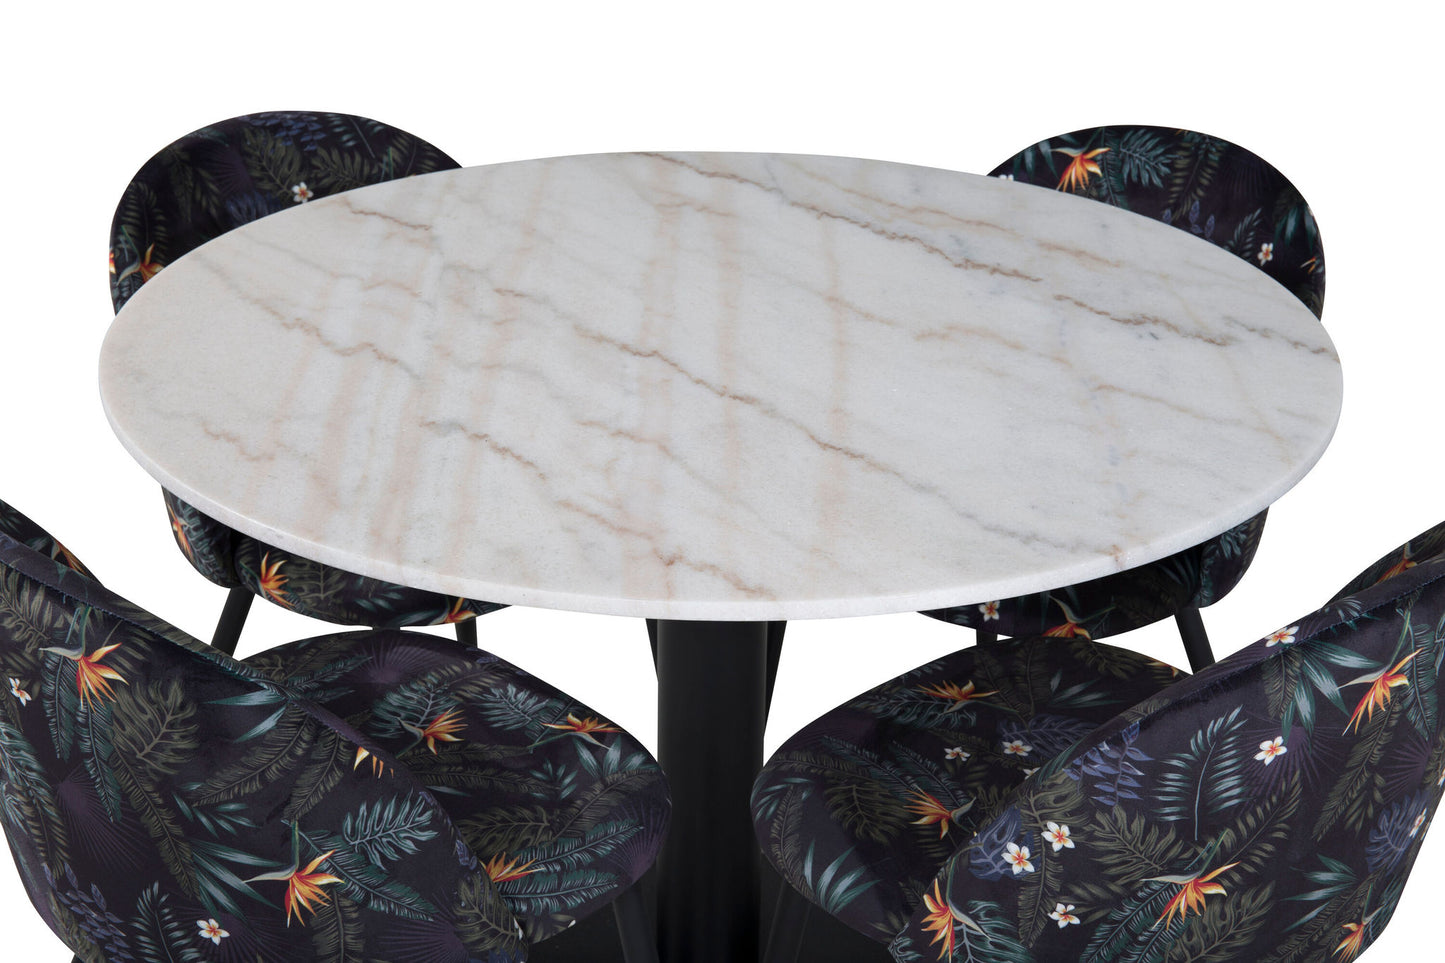 Estelle - Rundt spisebord, ø106 H75 - Hvid / Sort+ velour Spisebordsstol - Sort blomster stof